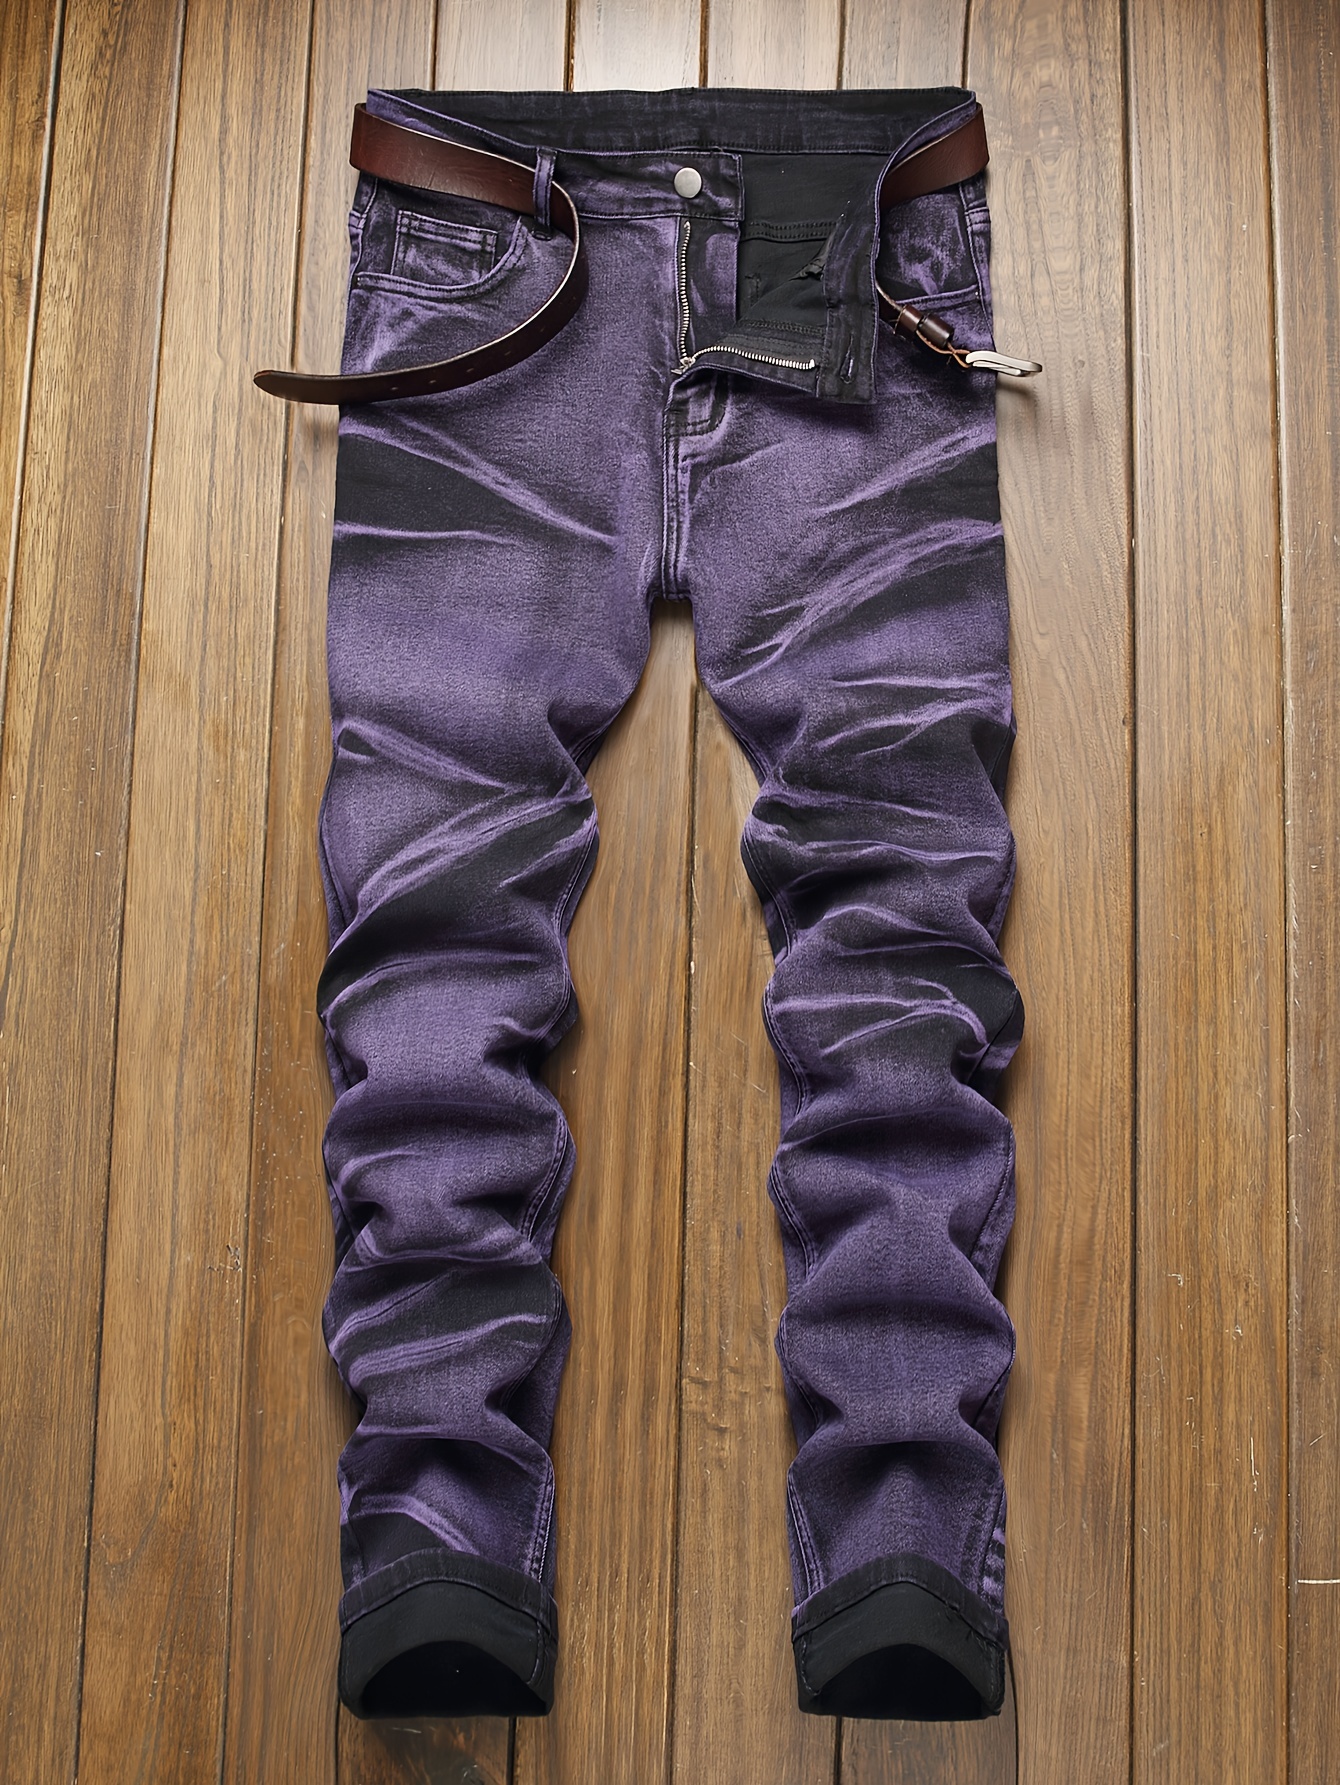 Purple Jeans for Men